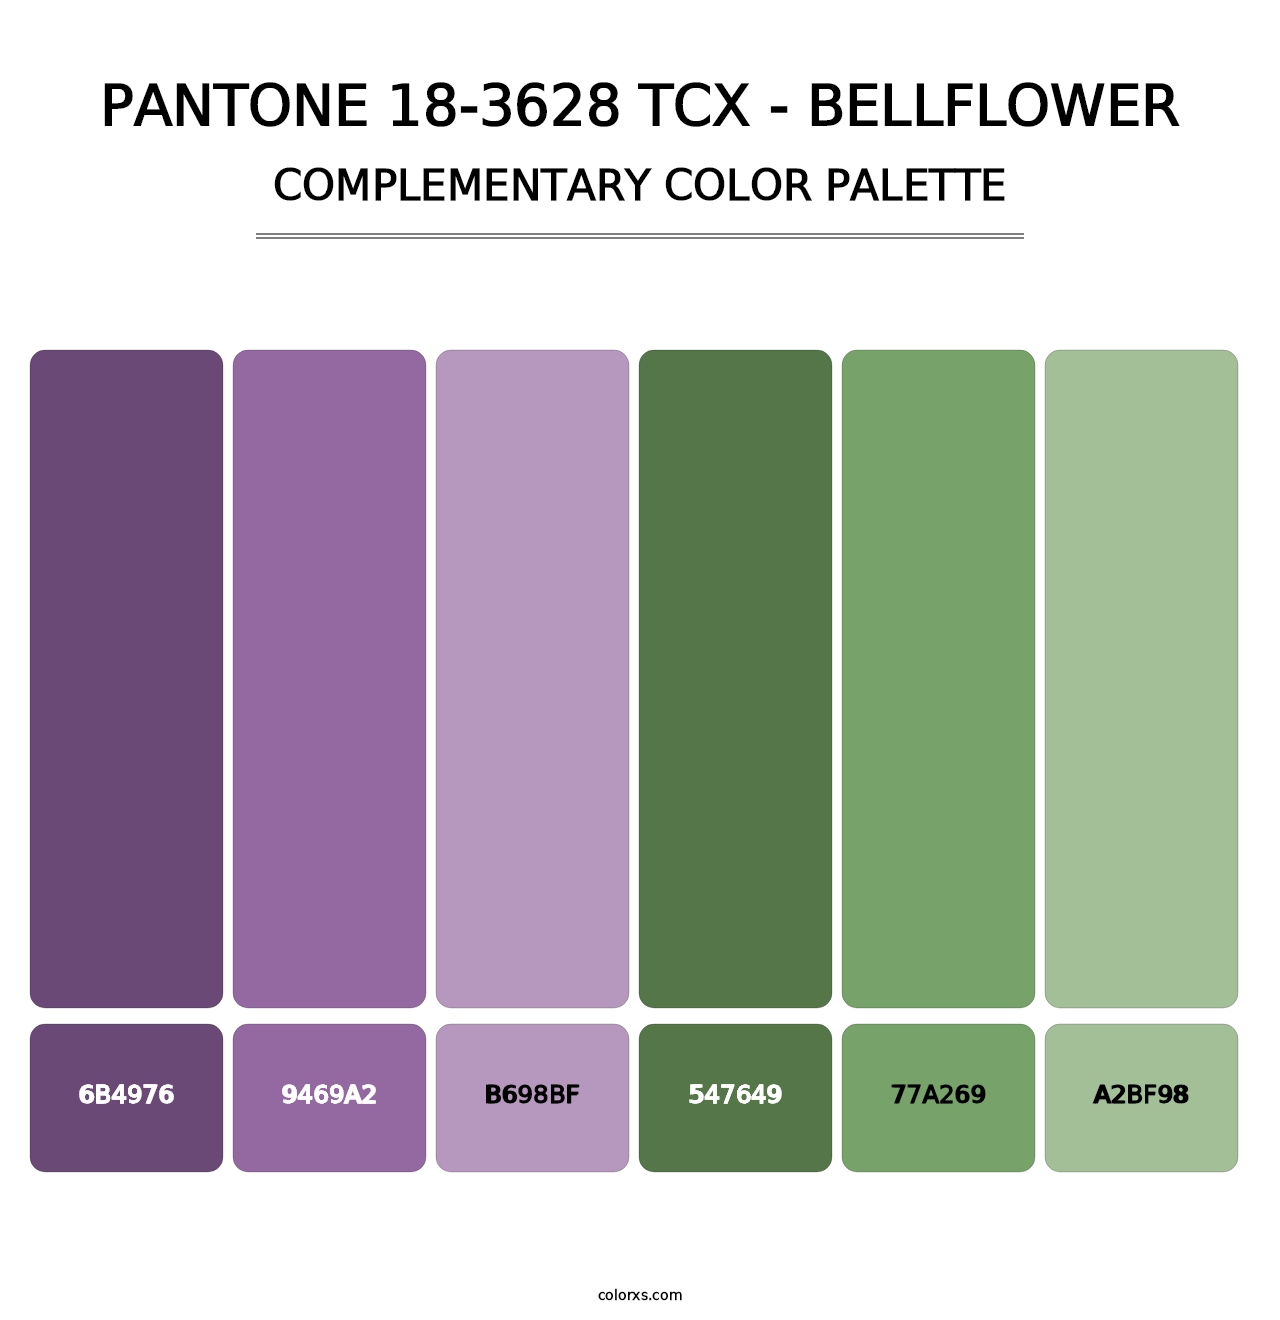 PANTONE 18-3628 TCX - Bellflower - Complementary Color Palette